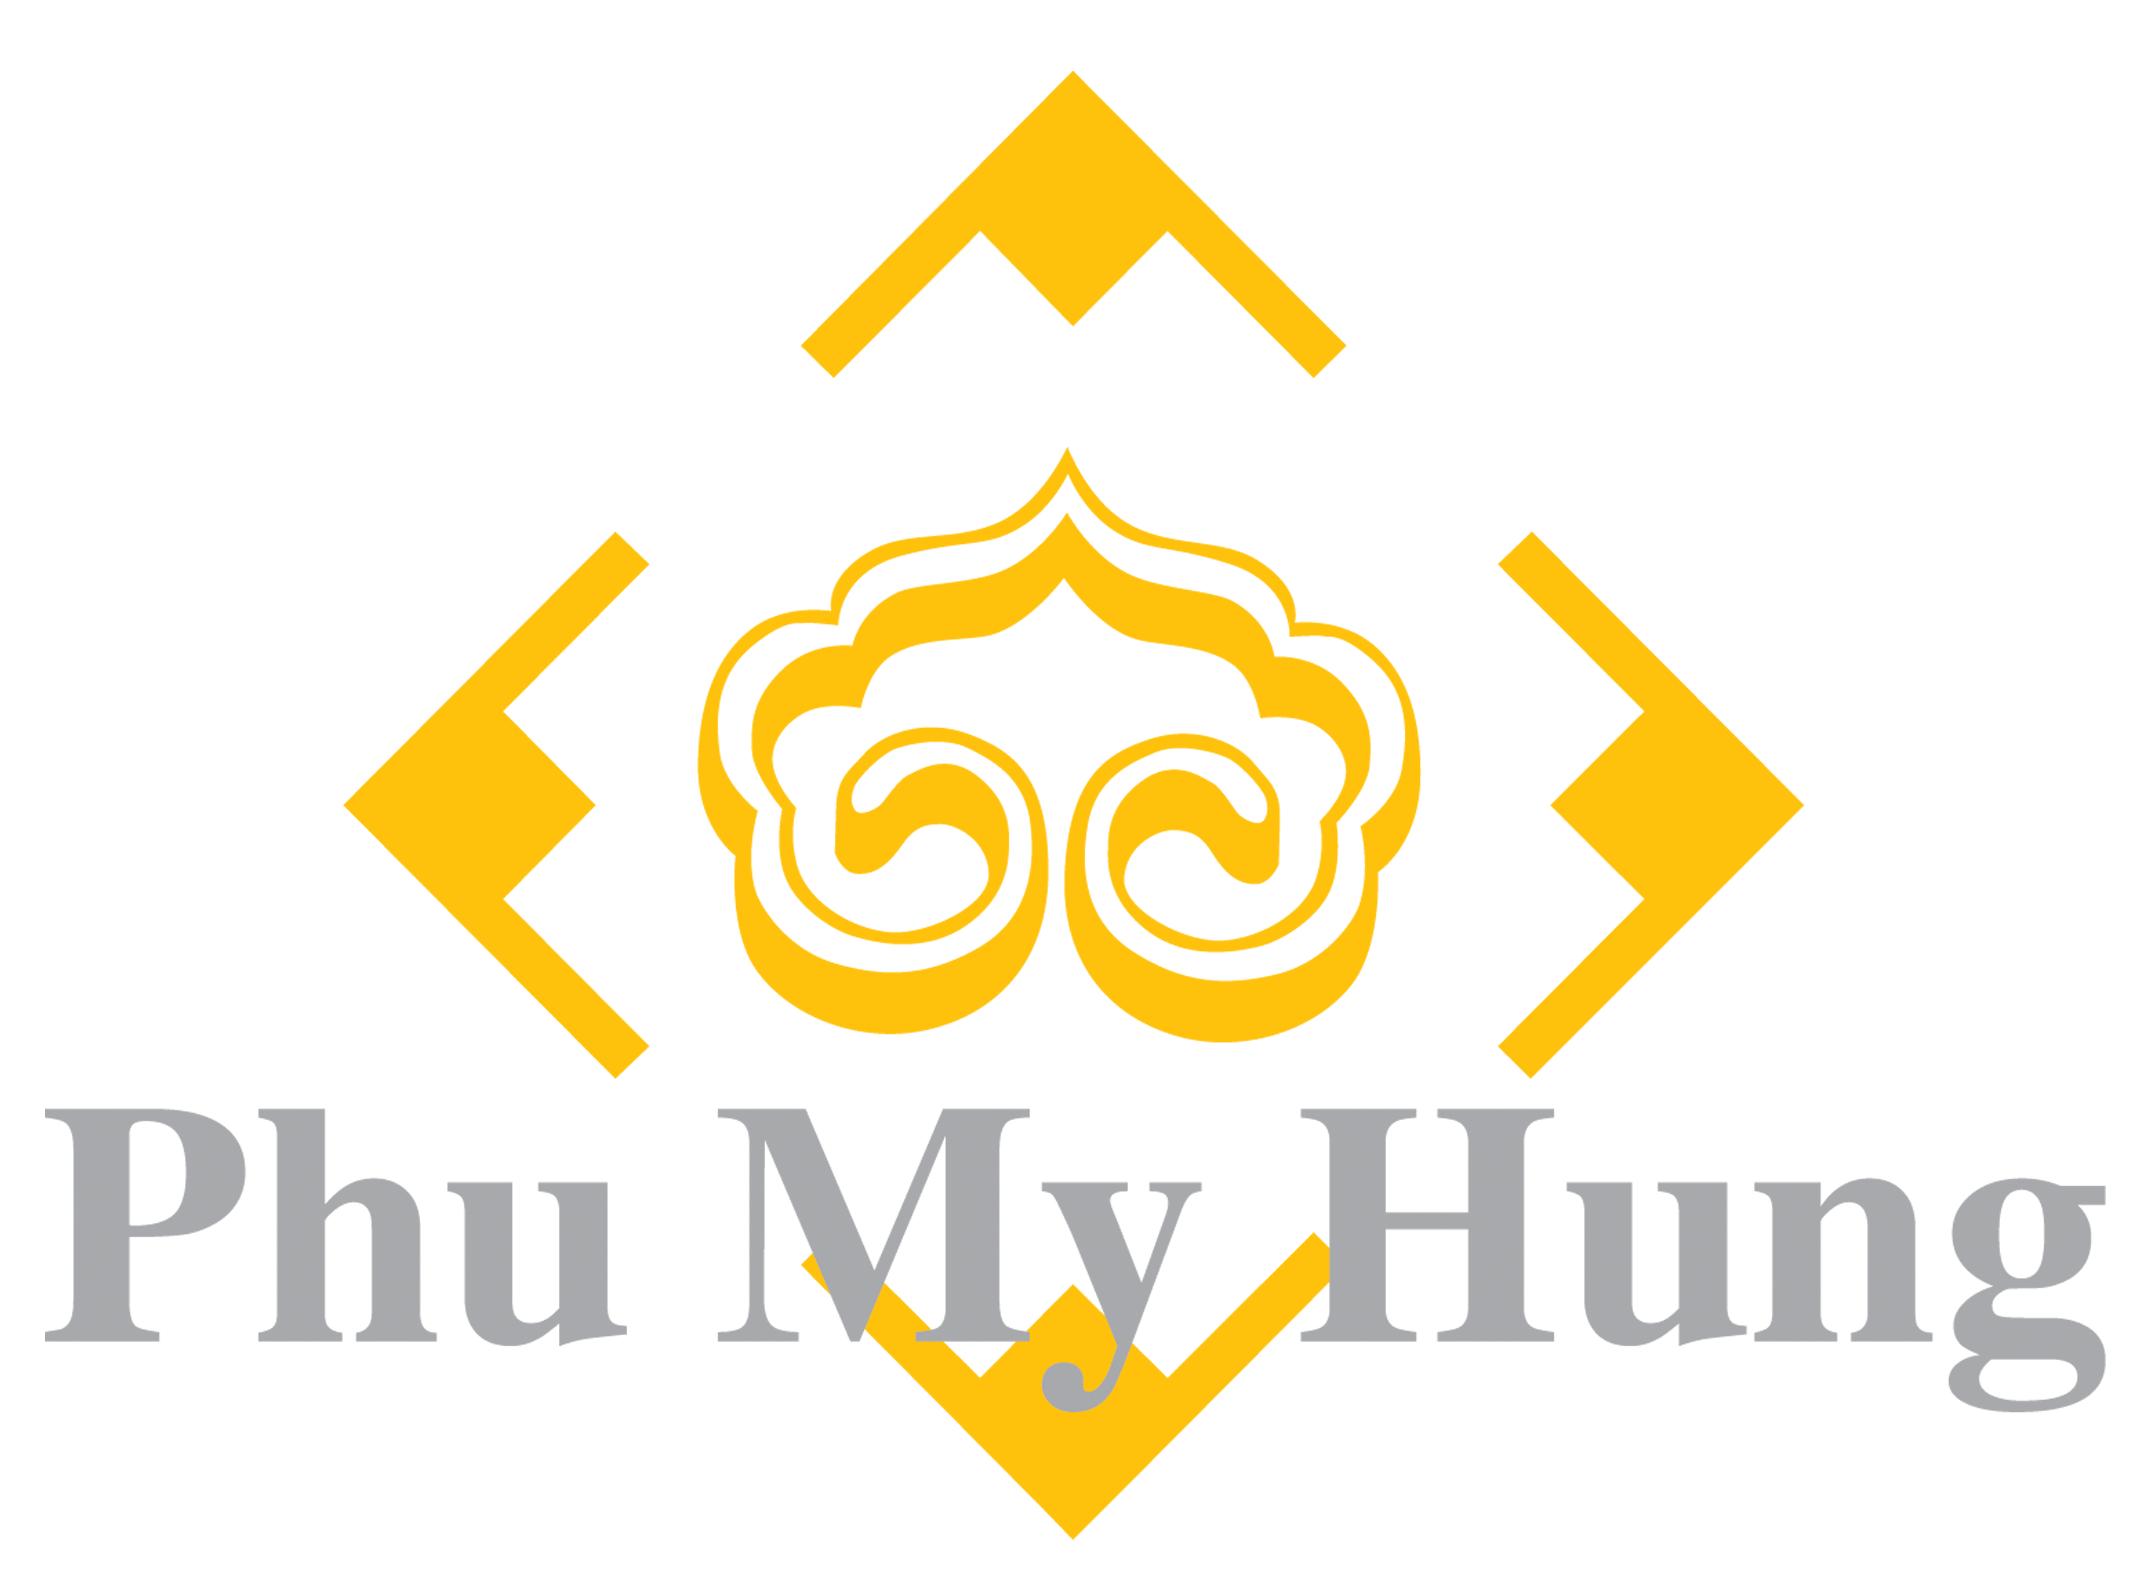 Phu My Hung